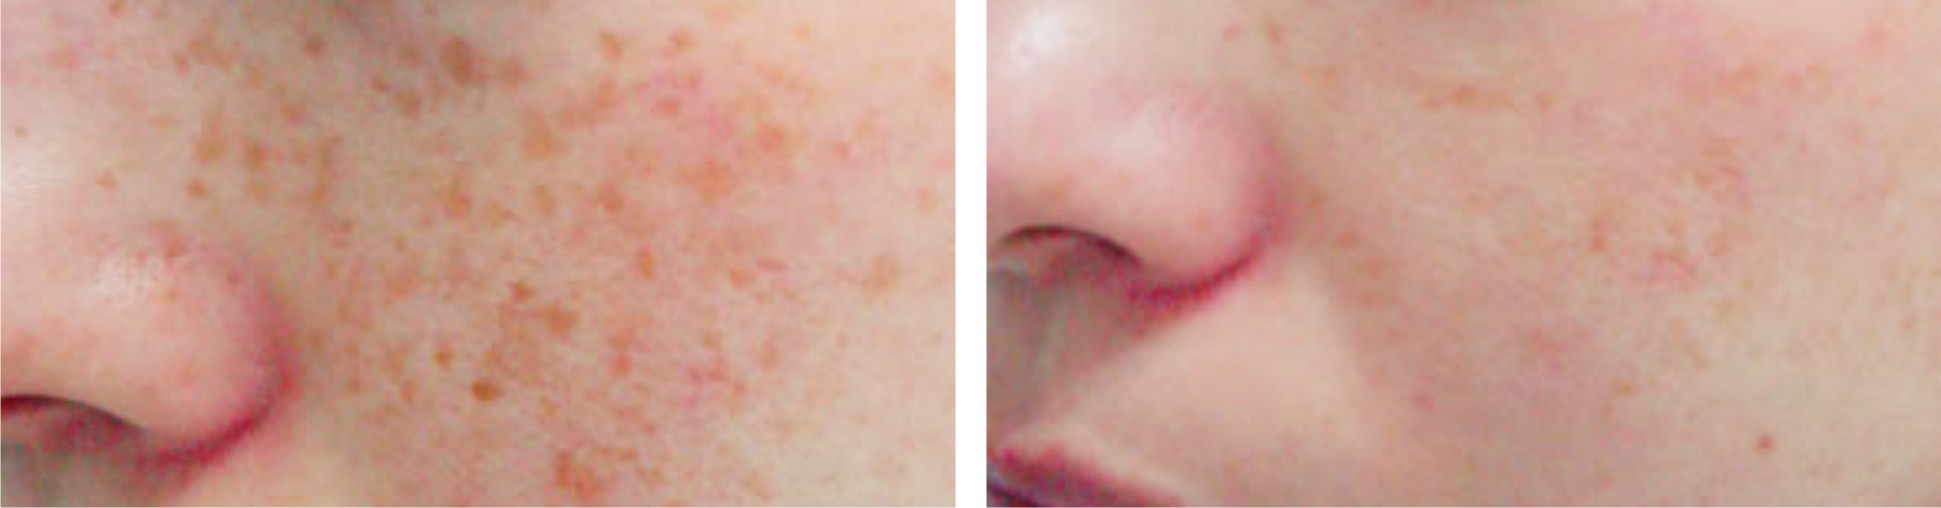 Laser Freckle Removal Image Four